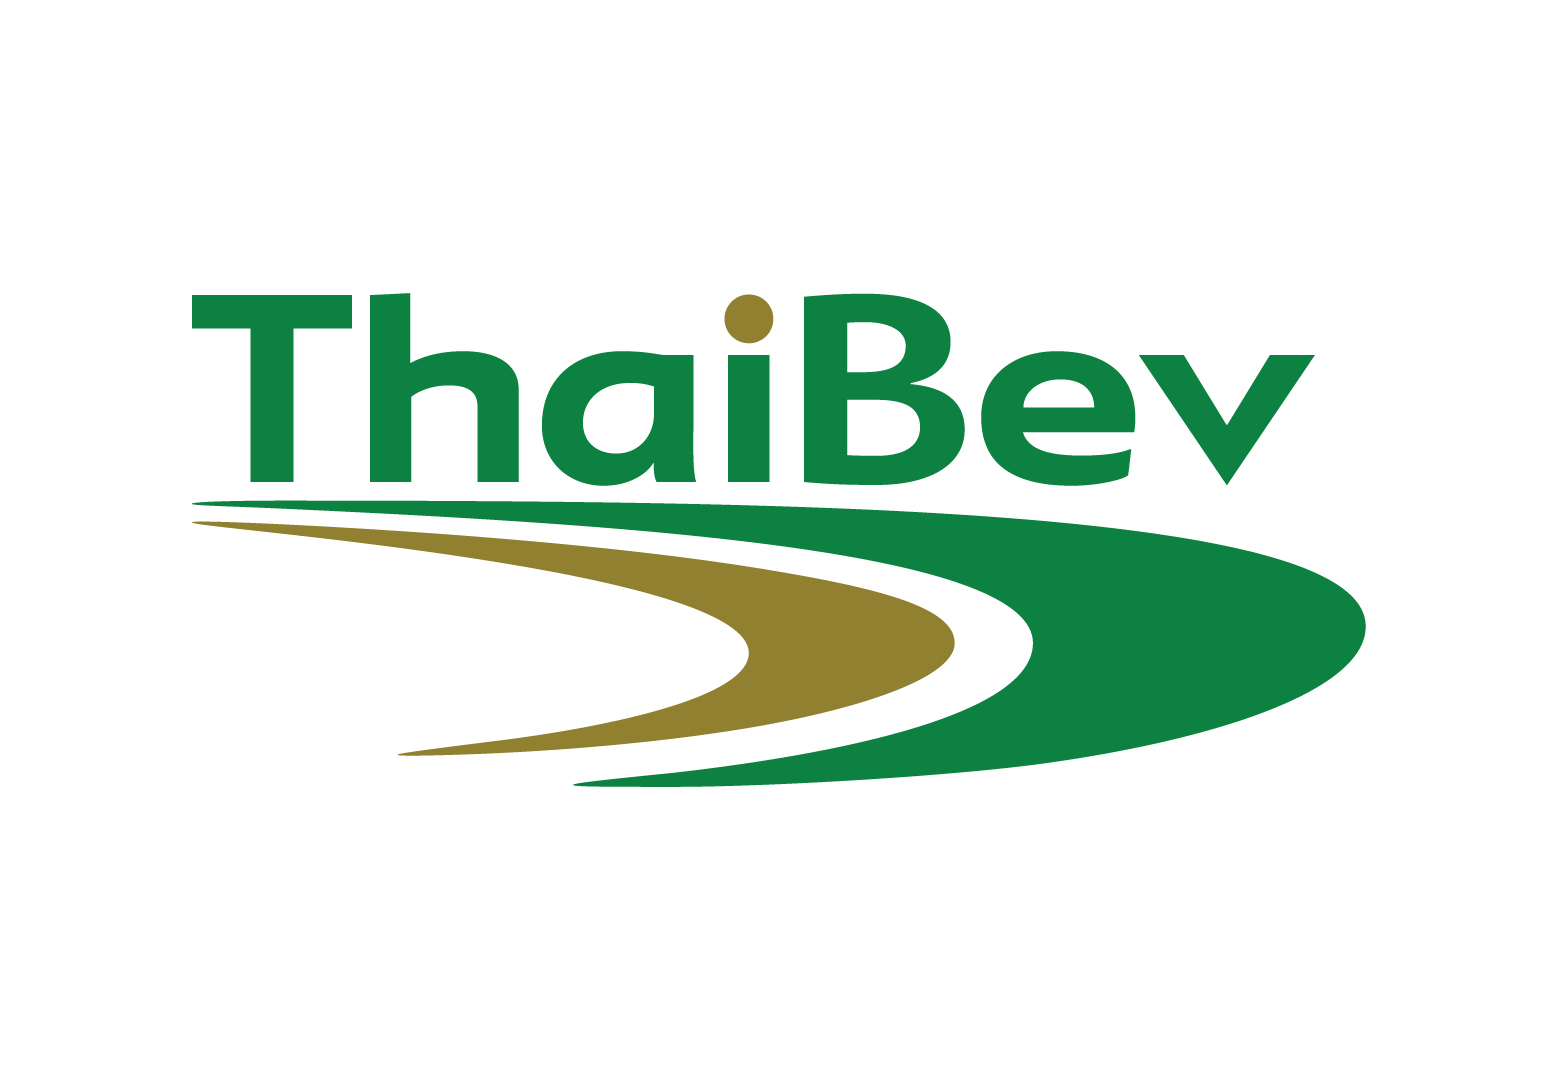 Thai beverage